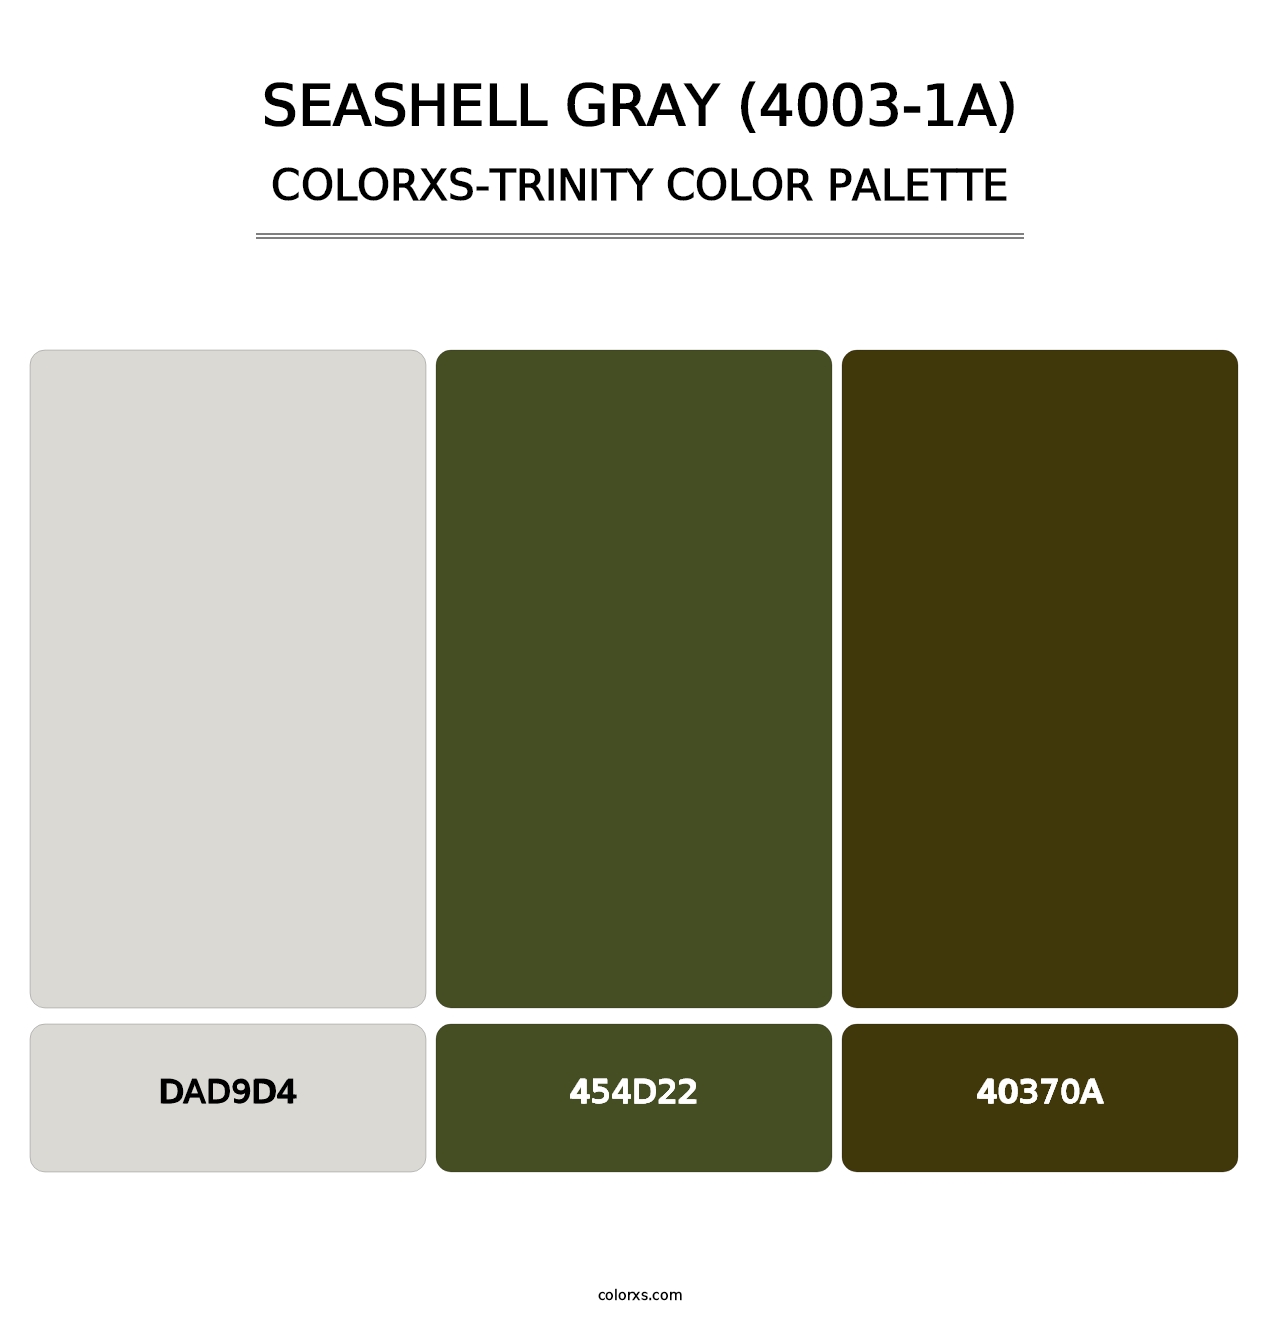 Seashell Gray (4003-1A) - Colorxs Trinity Palette